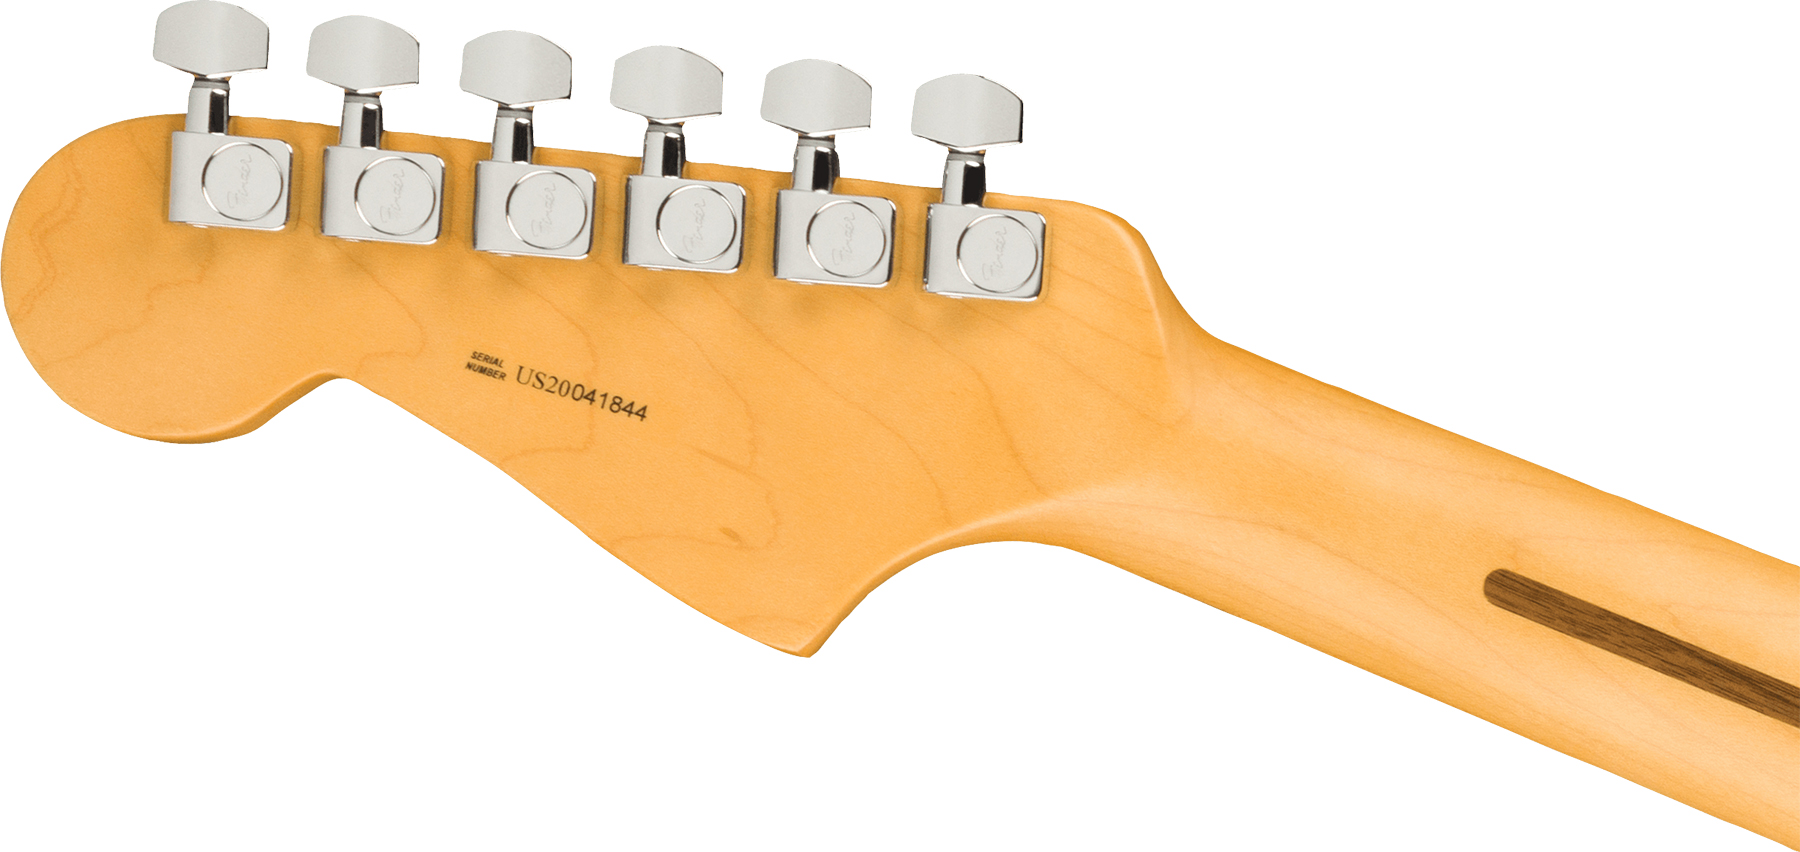 Fender Jazzmaster American Professional Ii Usa Rw - 3-color Sunburst - Retro rock electric guitar - Variation 3